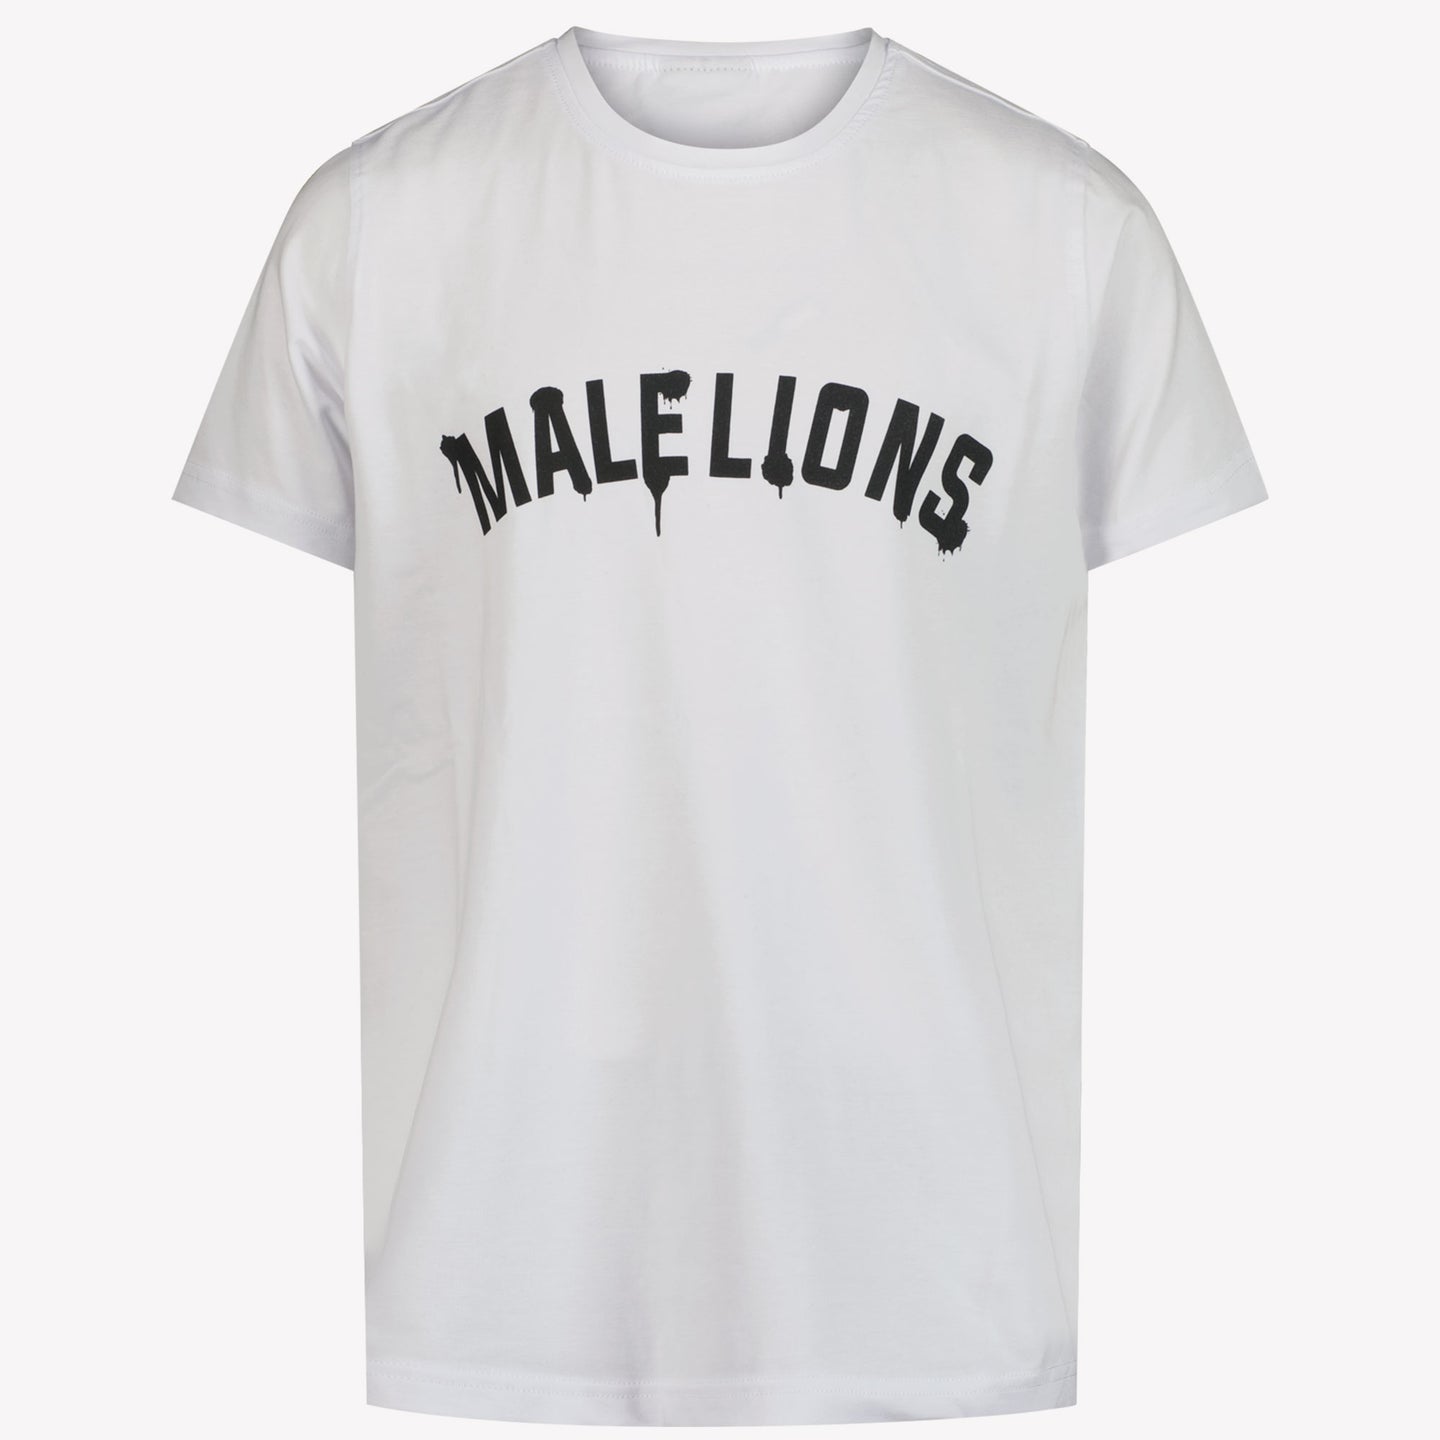 Malelions Unisex T-shirt White